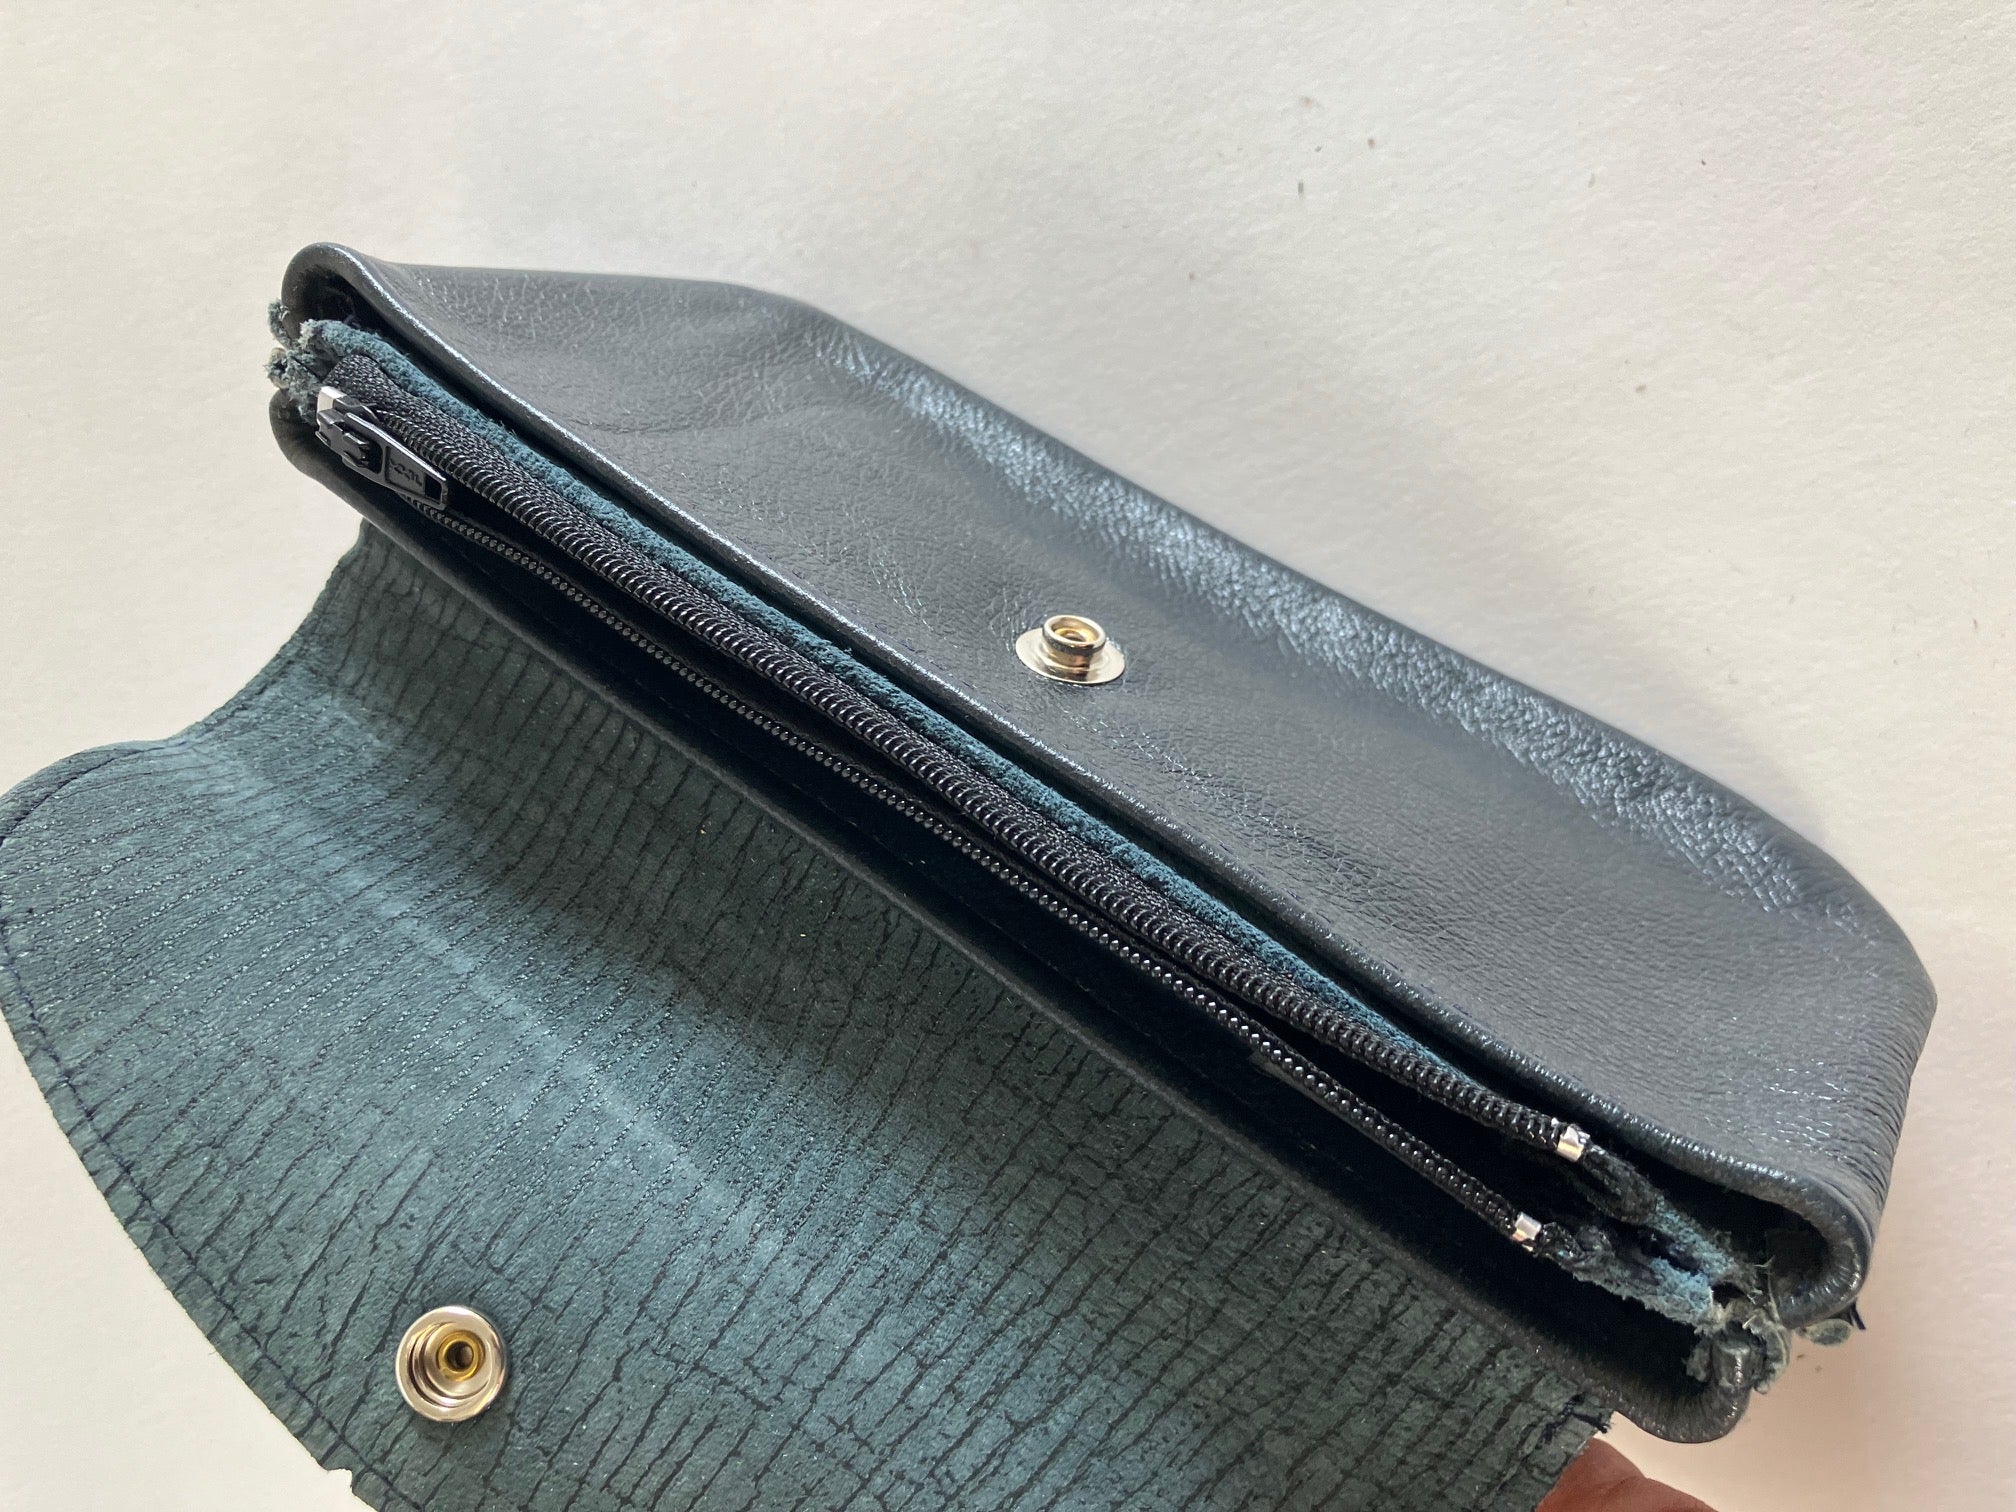 SAMPLE steel blue leather wallet